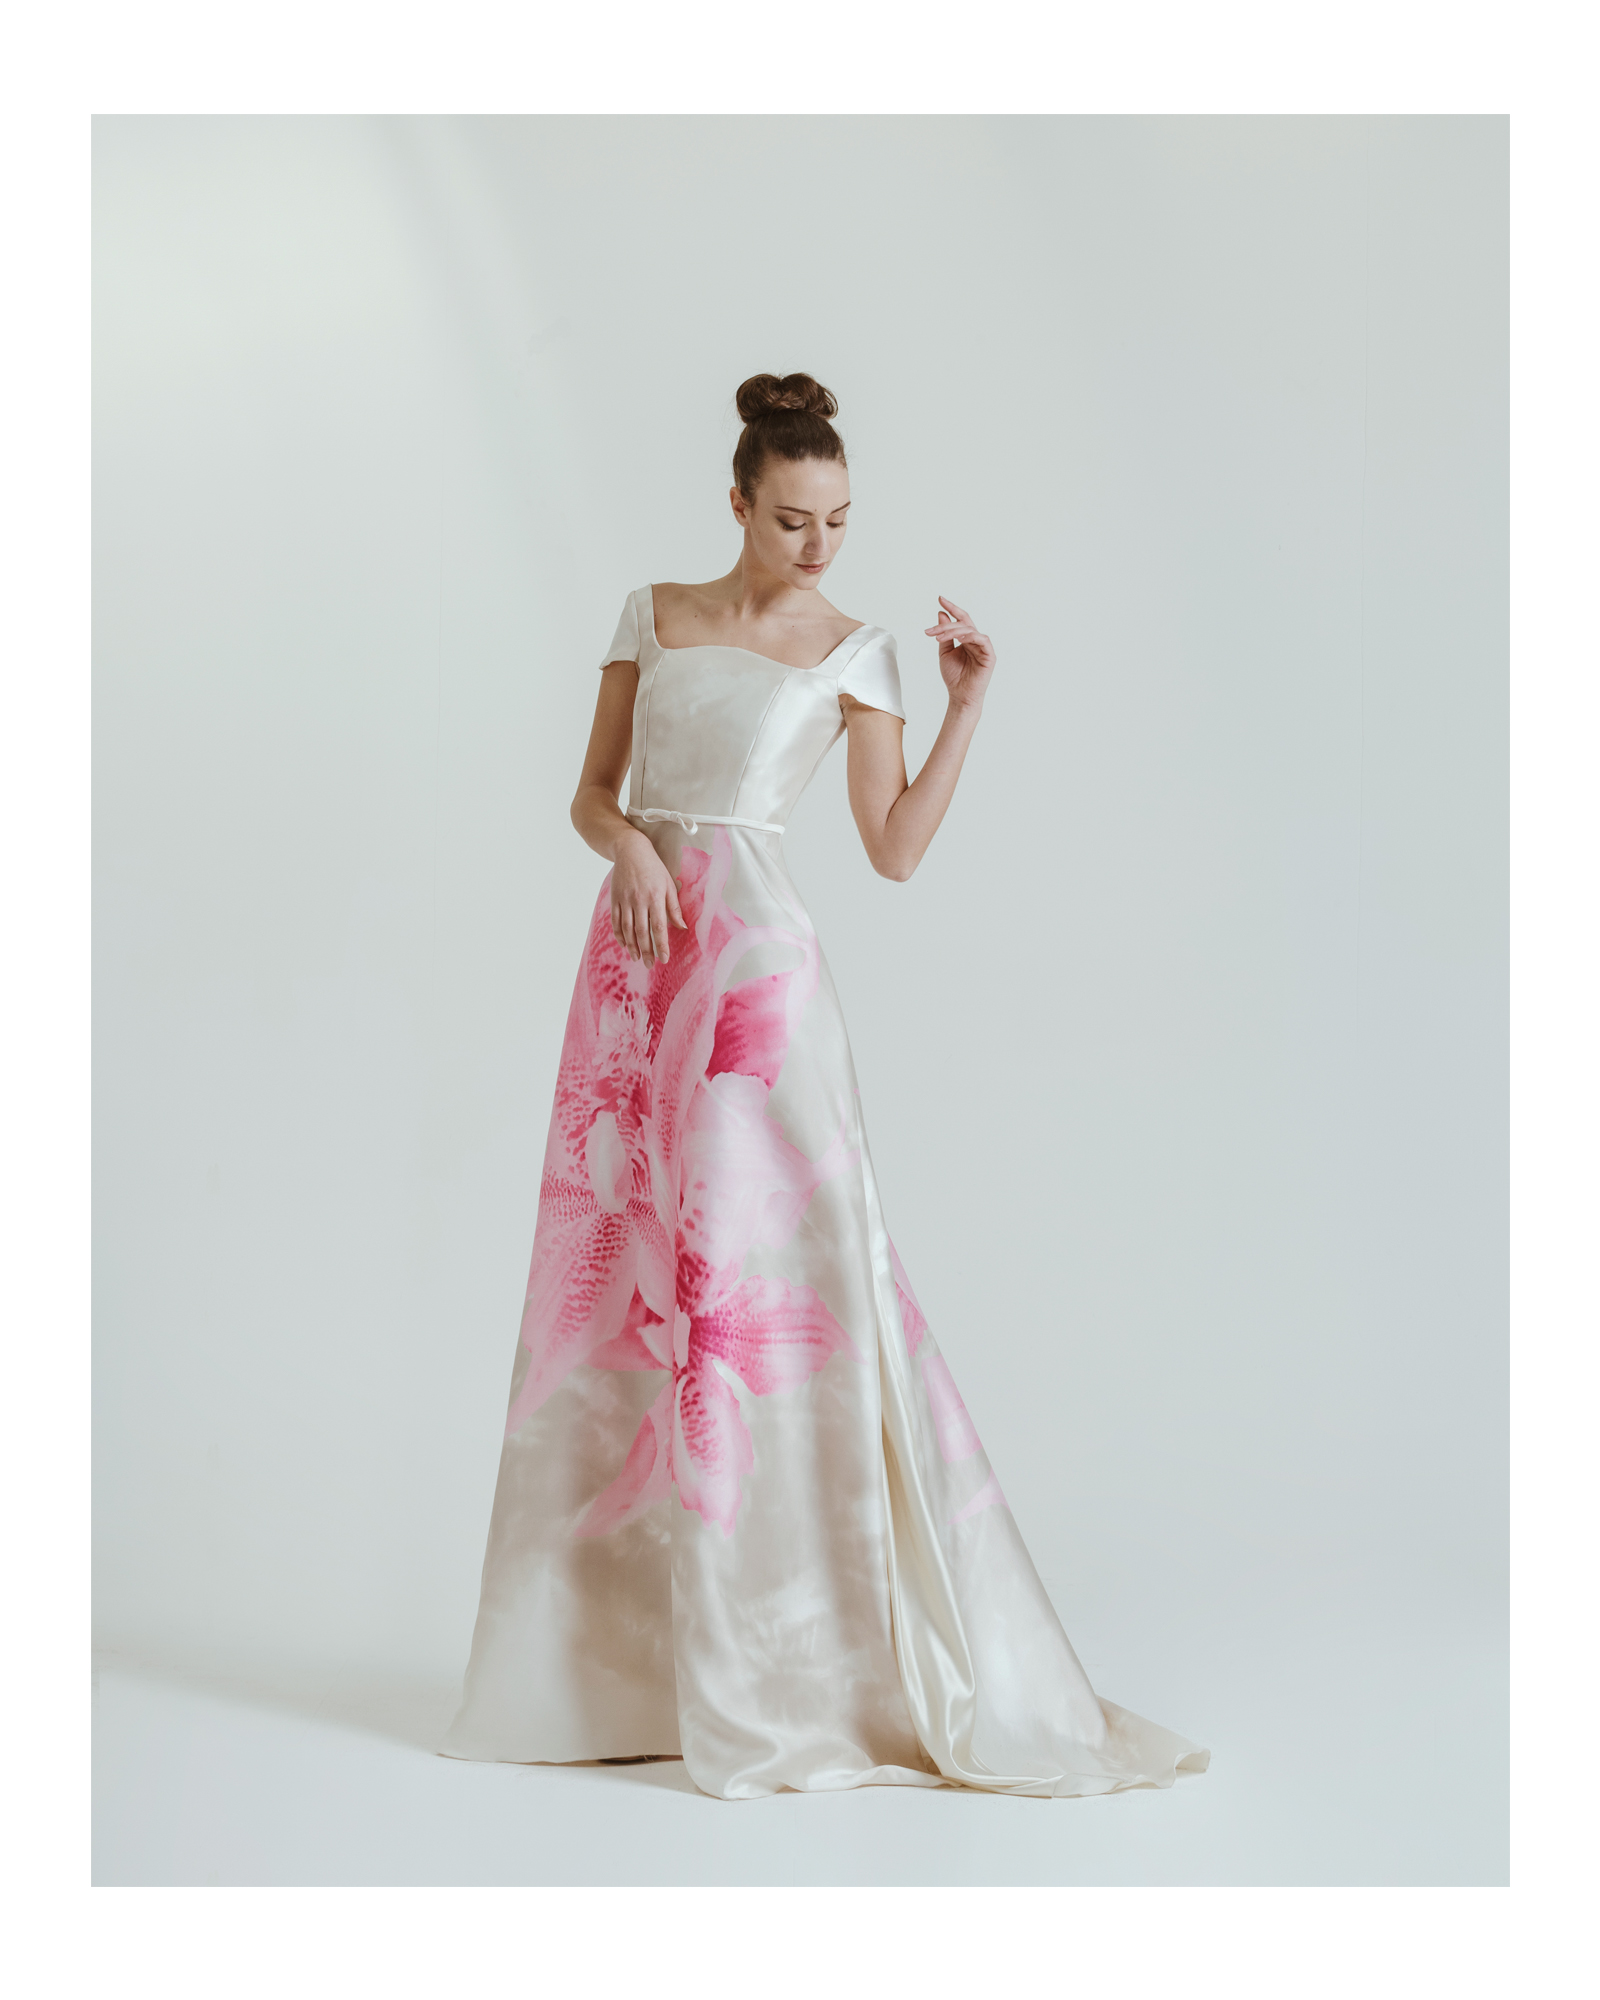 La Vie en Blanc Atelier partner esclusivo di Wedding Night per la moda sposa